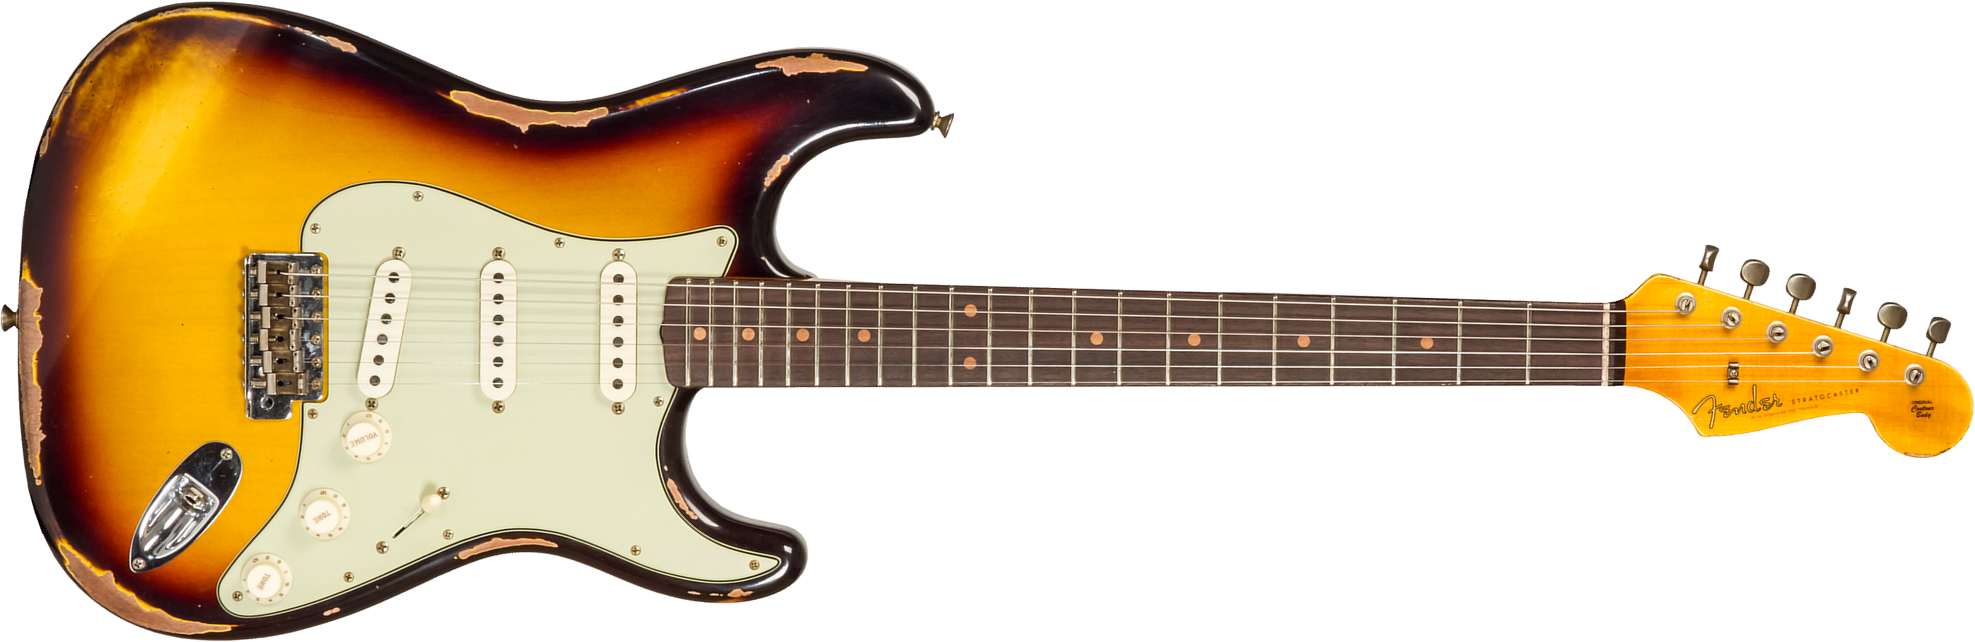 Fender Custom Shop Strat 1961 3s Trem Rw #cz573663 - Heavy Relic Aged 3-color Sunburst - Elektrische gitaar in Str-vorm - Main picture